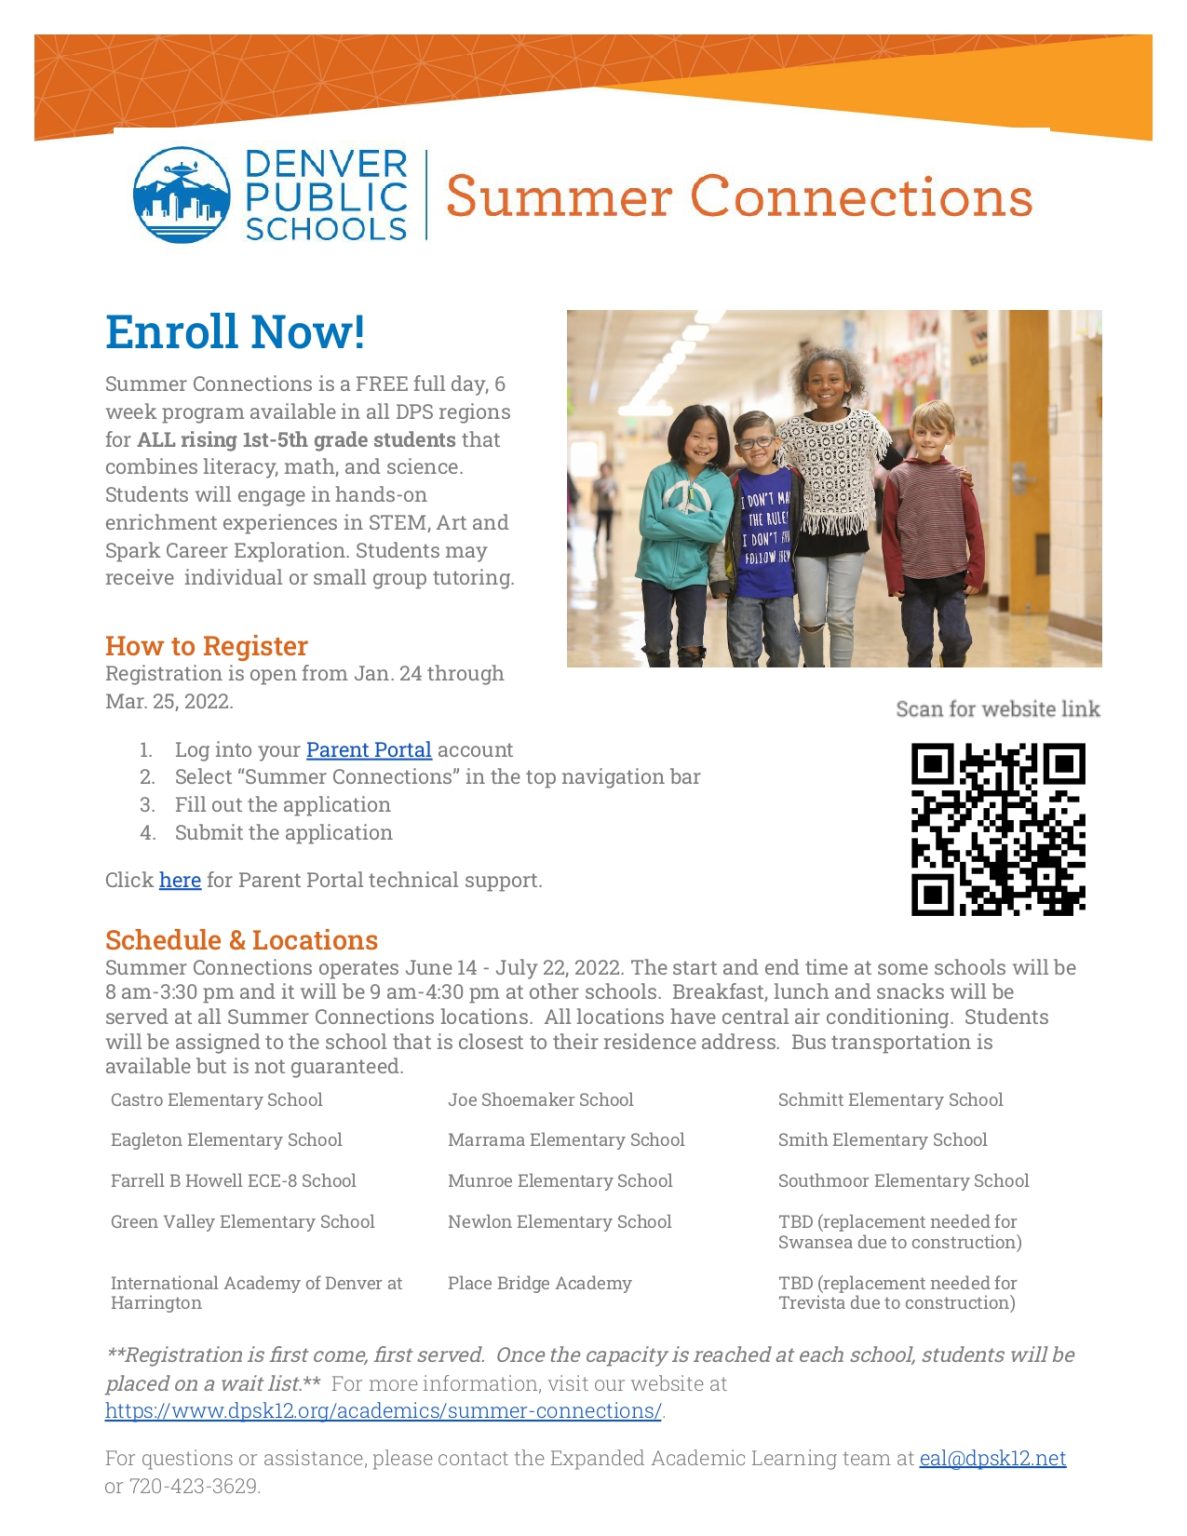 McKinleyThatcher » Summer Connections FREE DPS Summer Program for